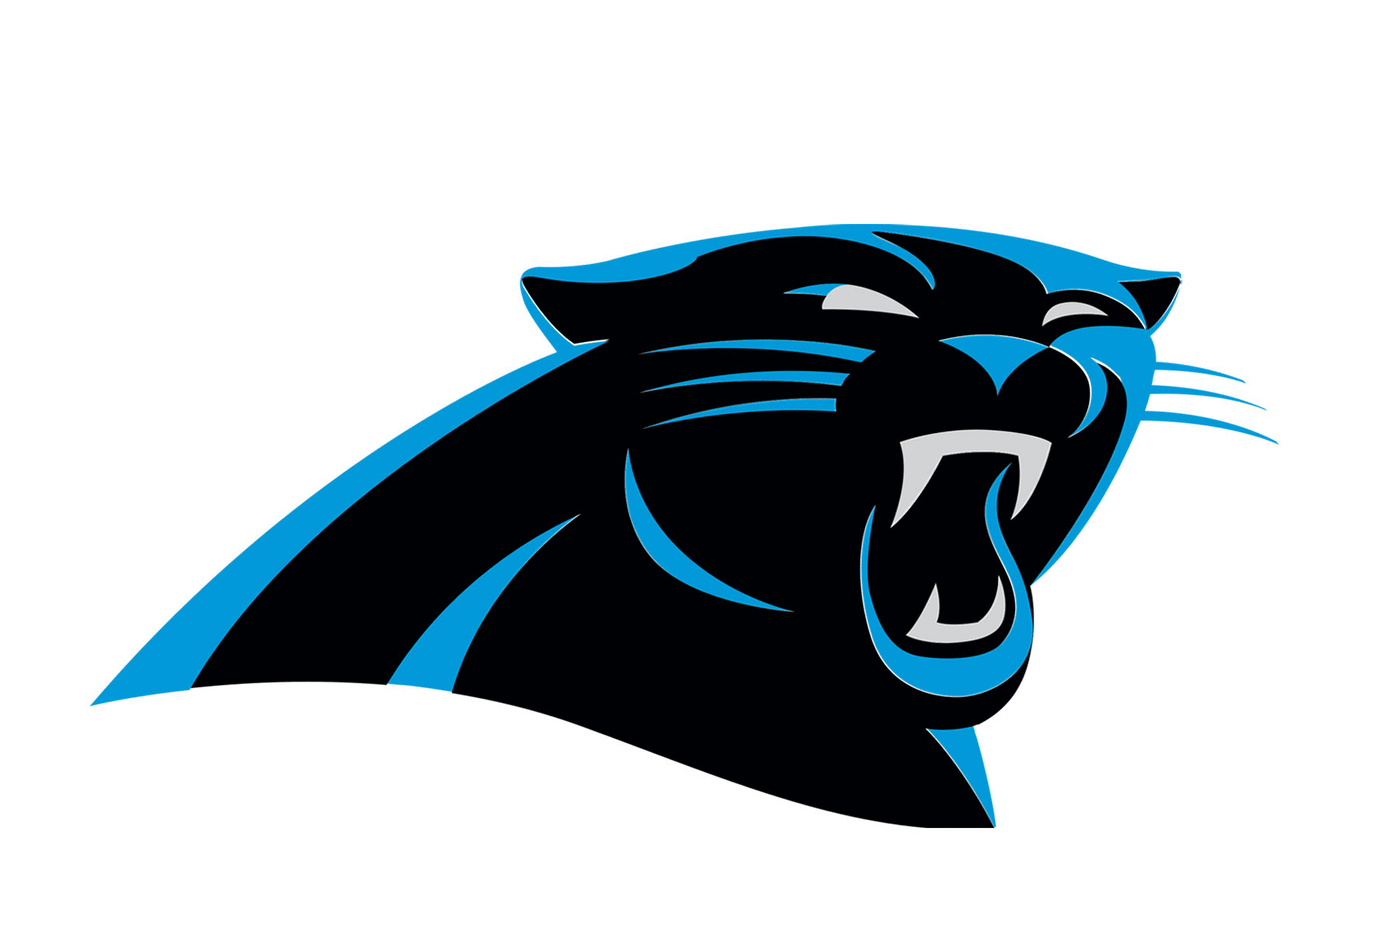 Carolina Panthers Football Helmet